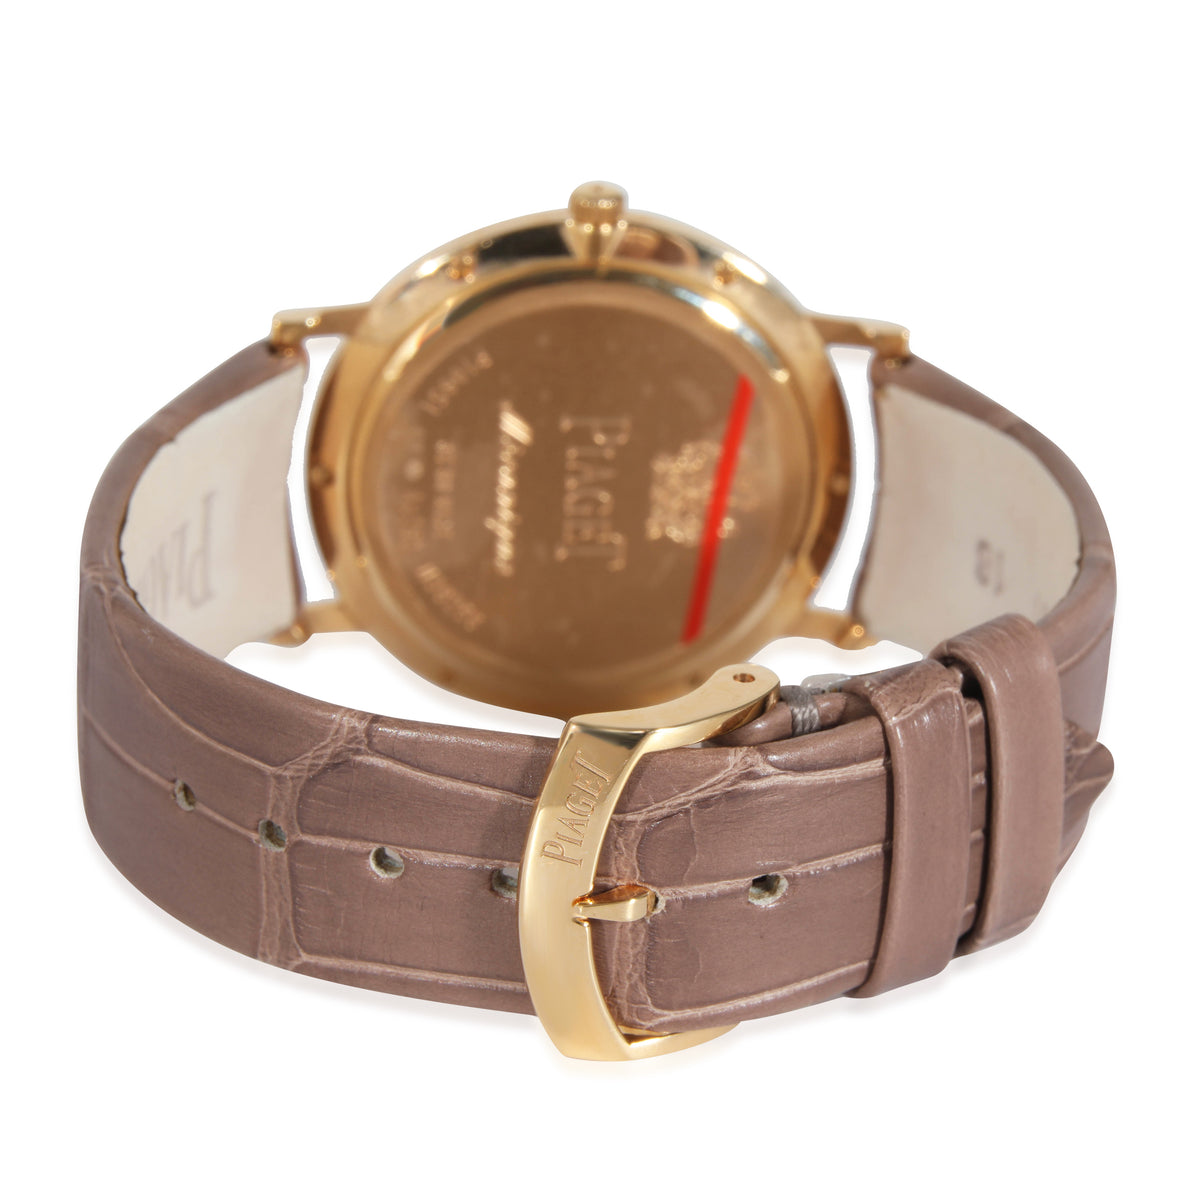 Altiplano Origin GOA39107 Unisex Watch in 18kt Rose Gold